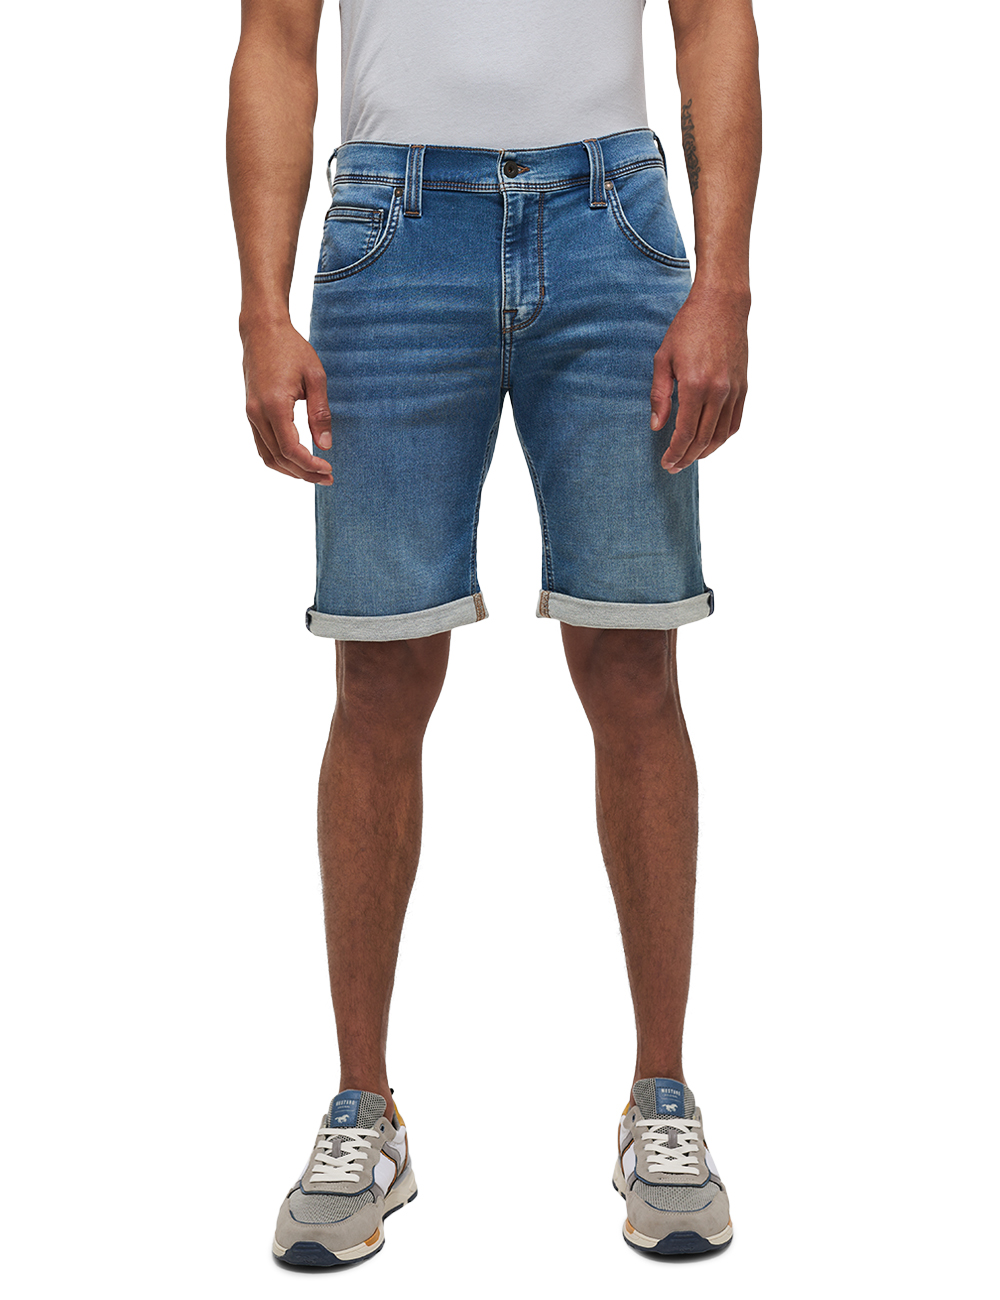 Jeans Shorts shoppen online Modetrends aktuelle jetzt 